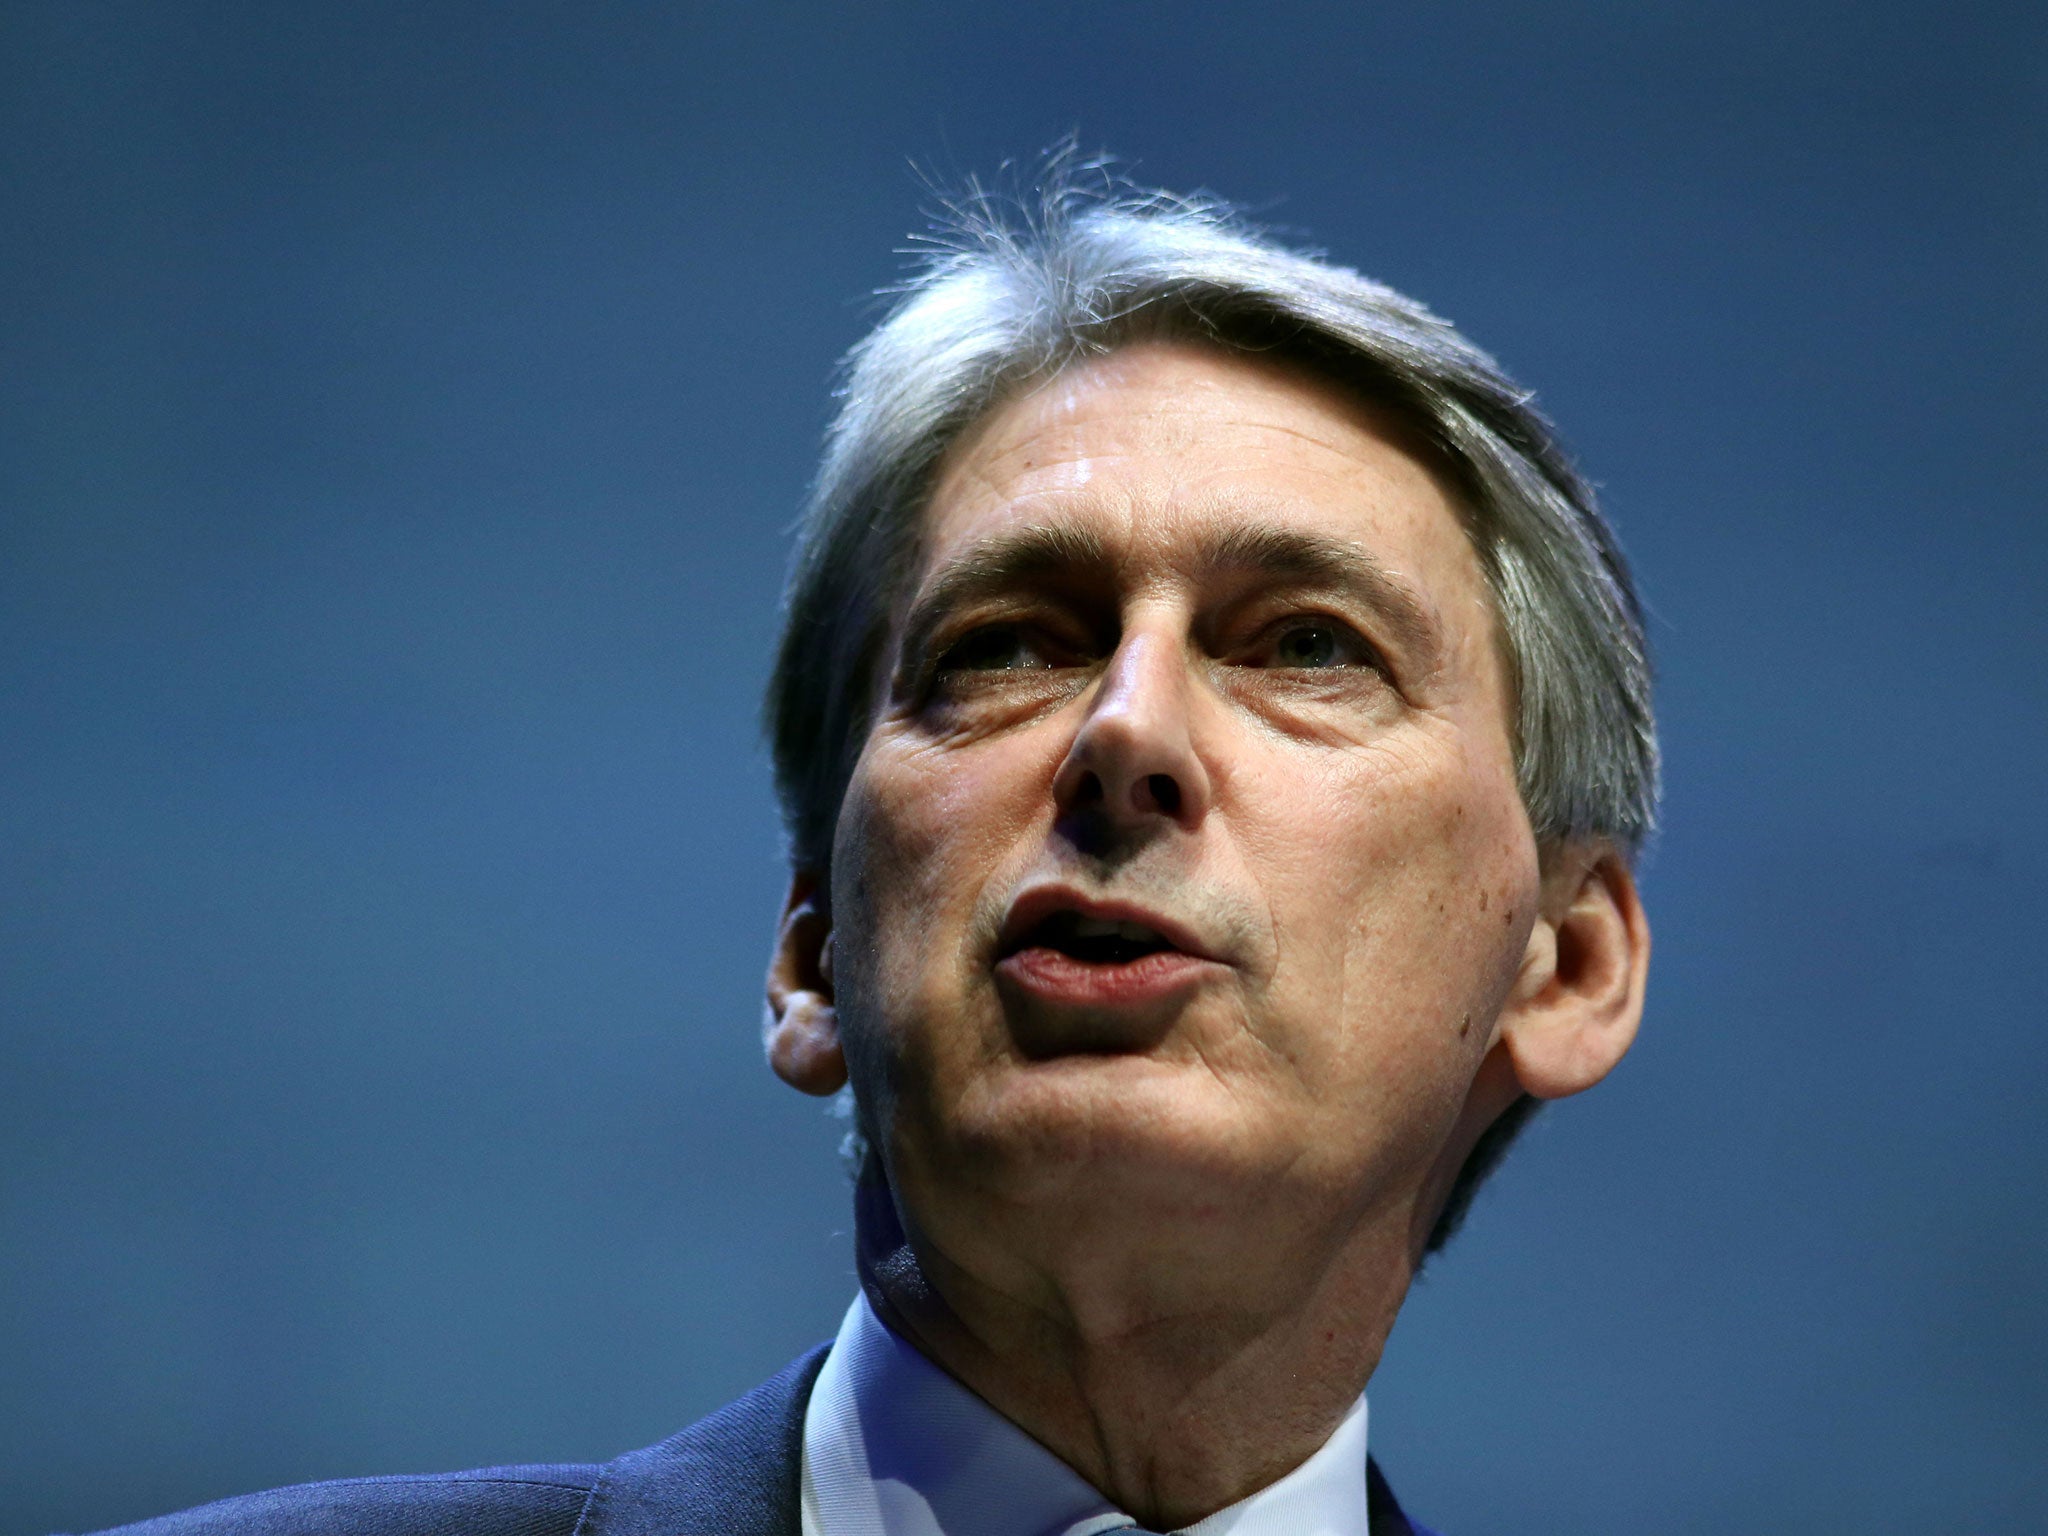 Chancellor Philip Hammond favours a close partnership with the EU